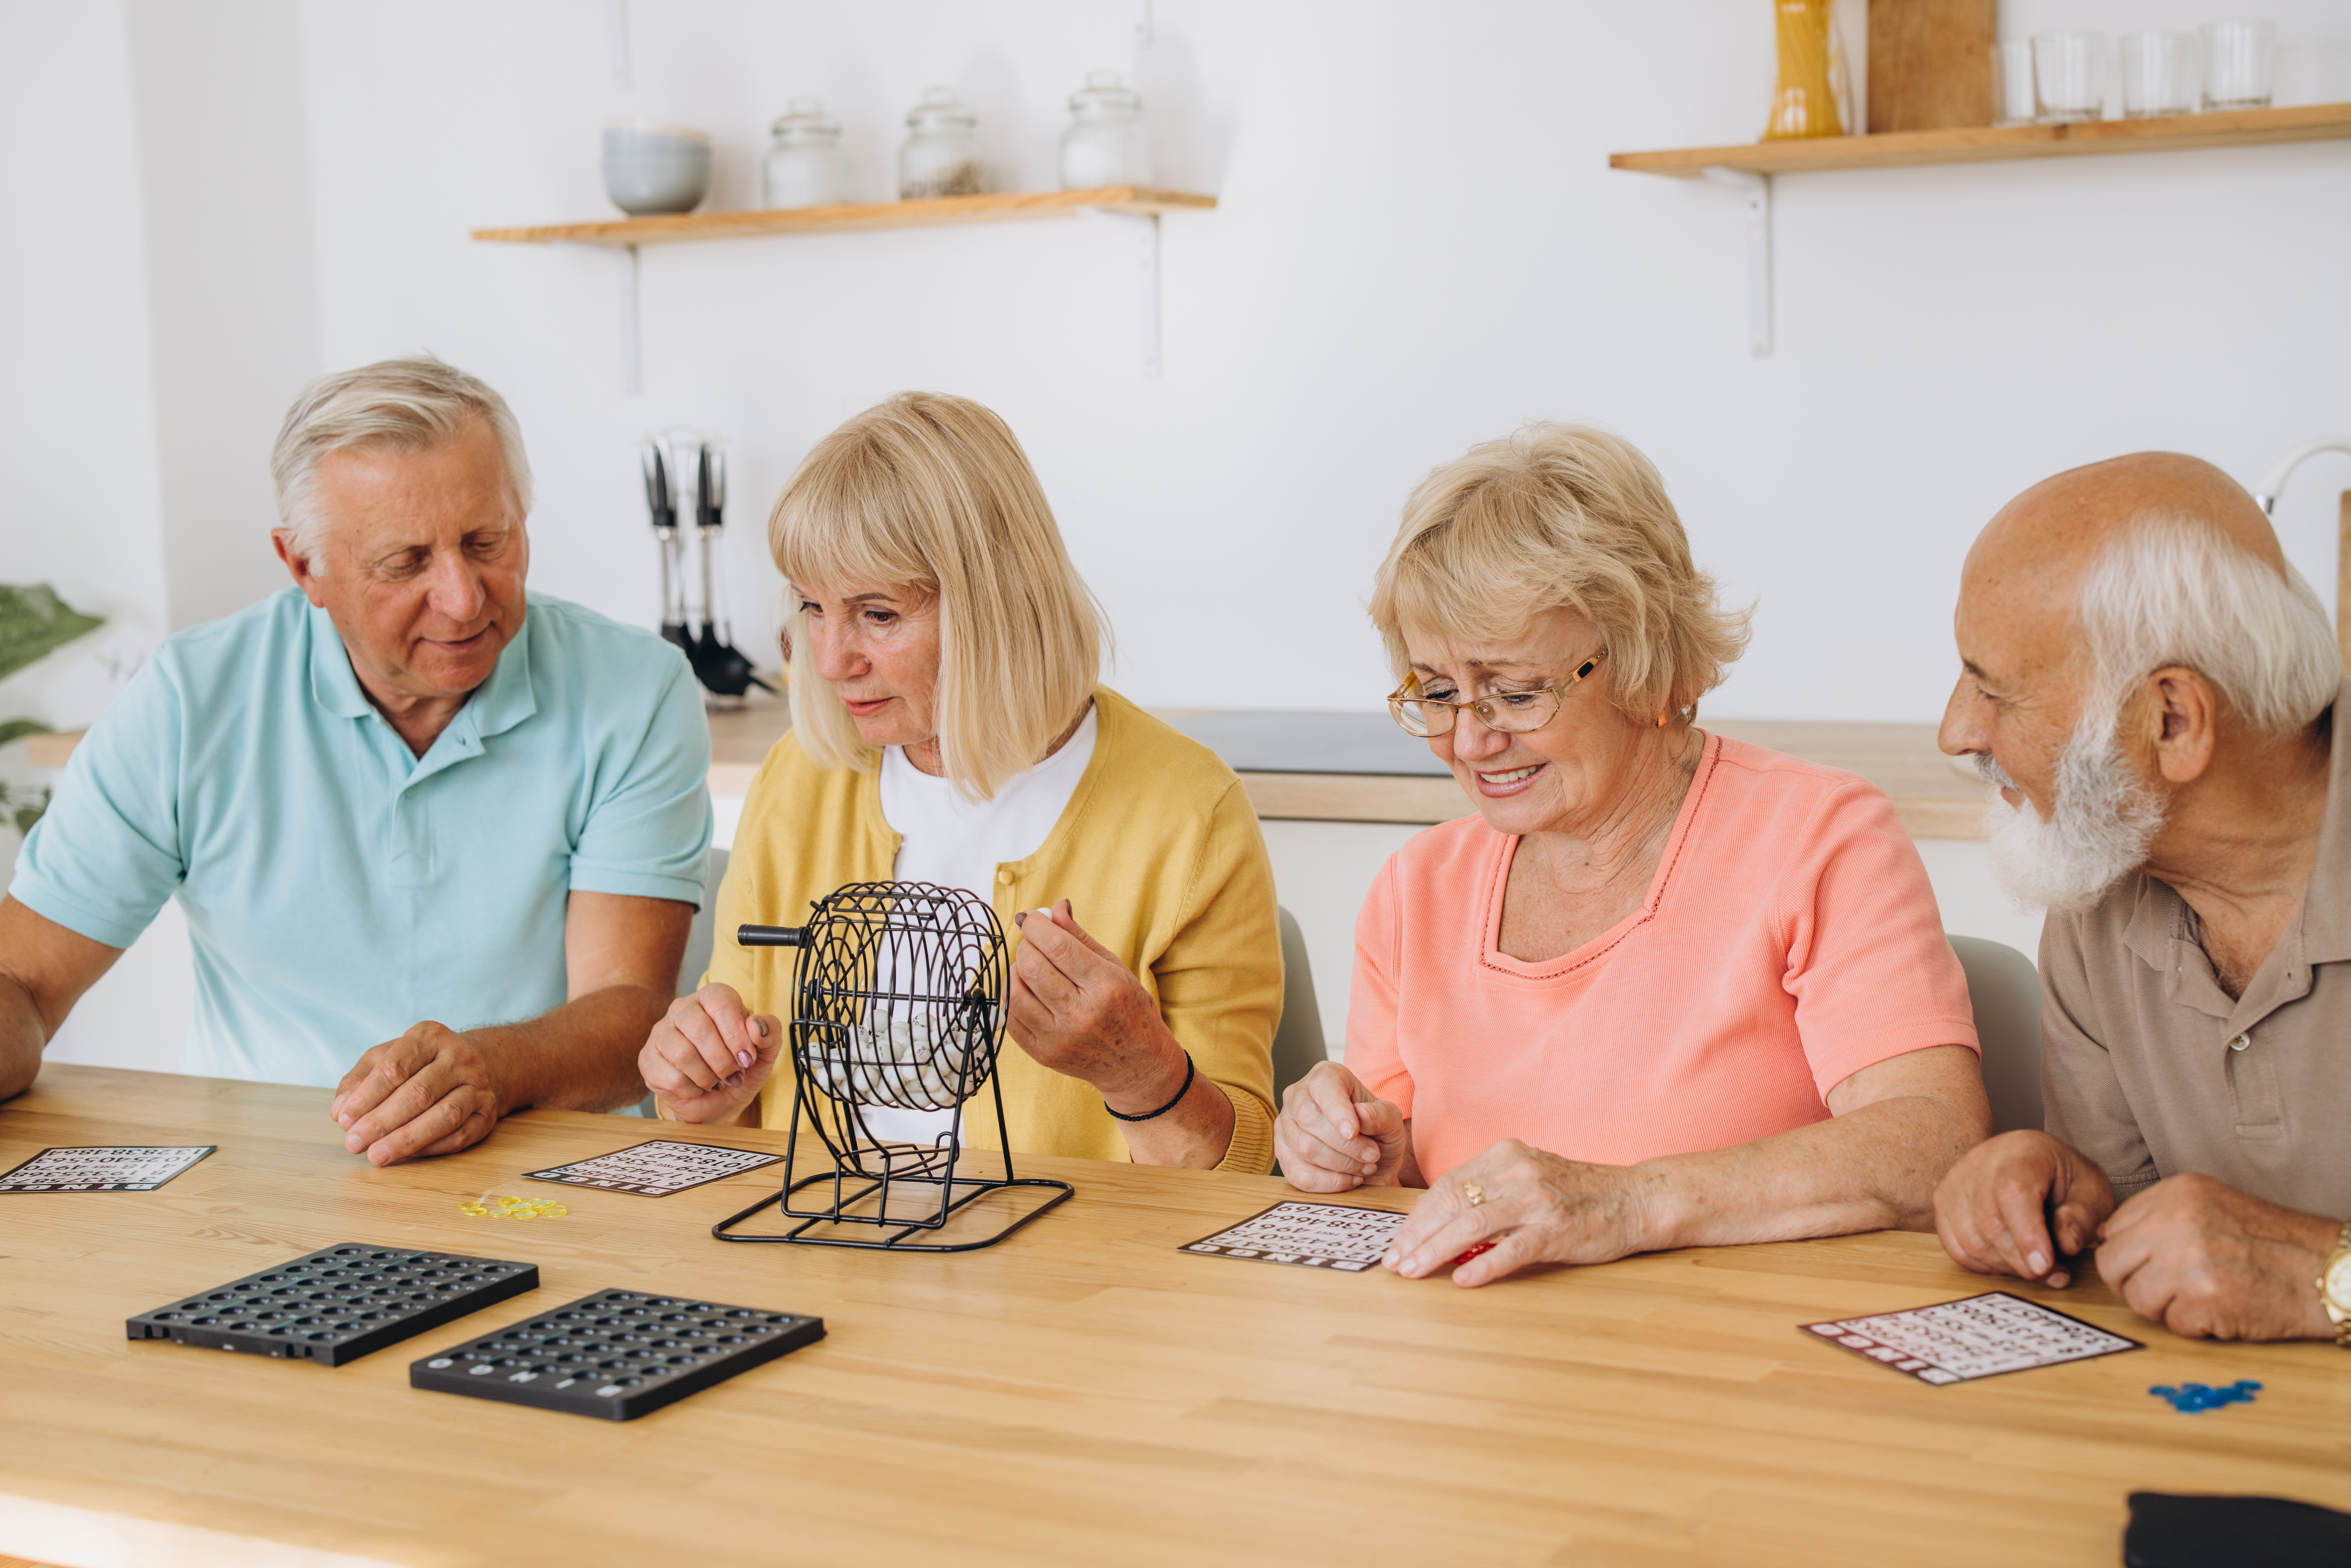 Group of four cheerful senior people playing bingo game in nursing home